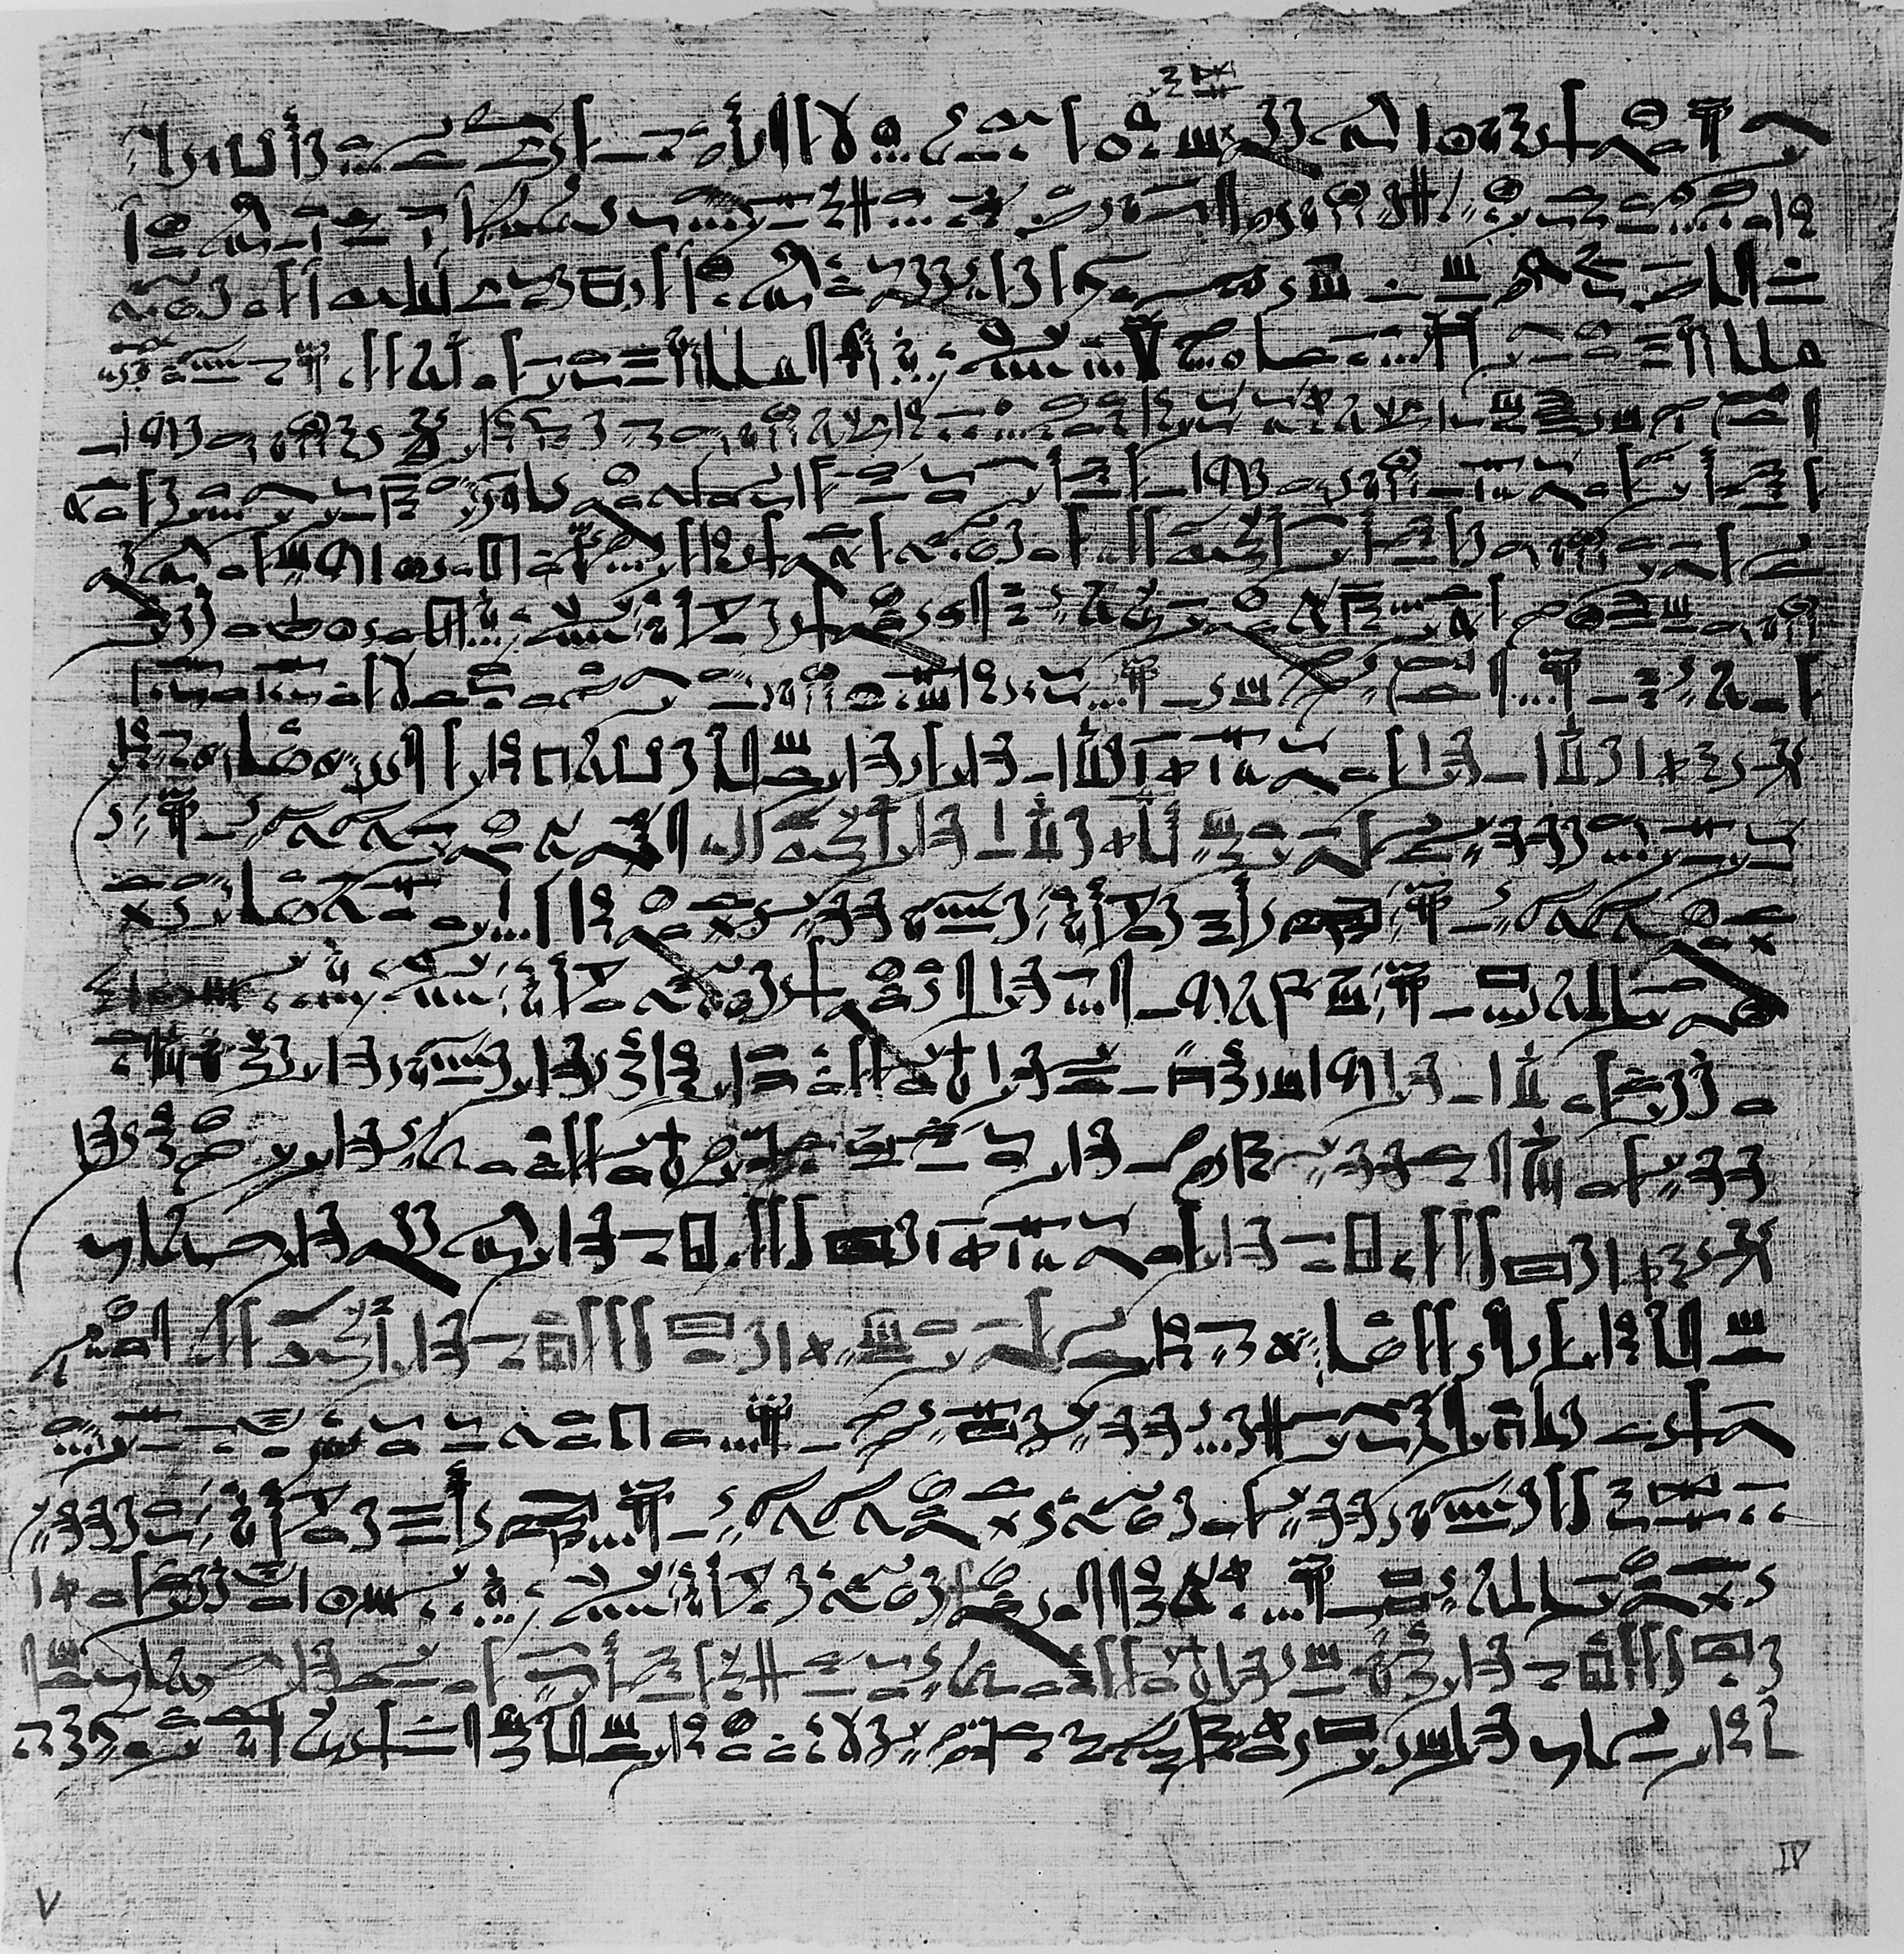 Edwin Smith Papyrus HD wallpapers, Desktop wallpaper - most viewed